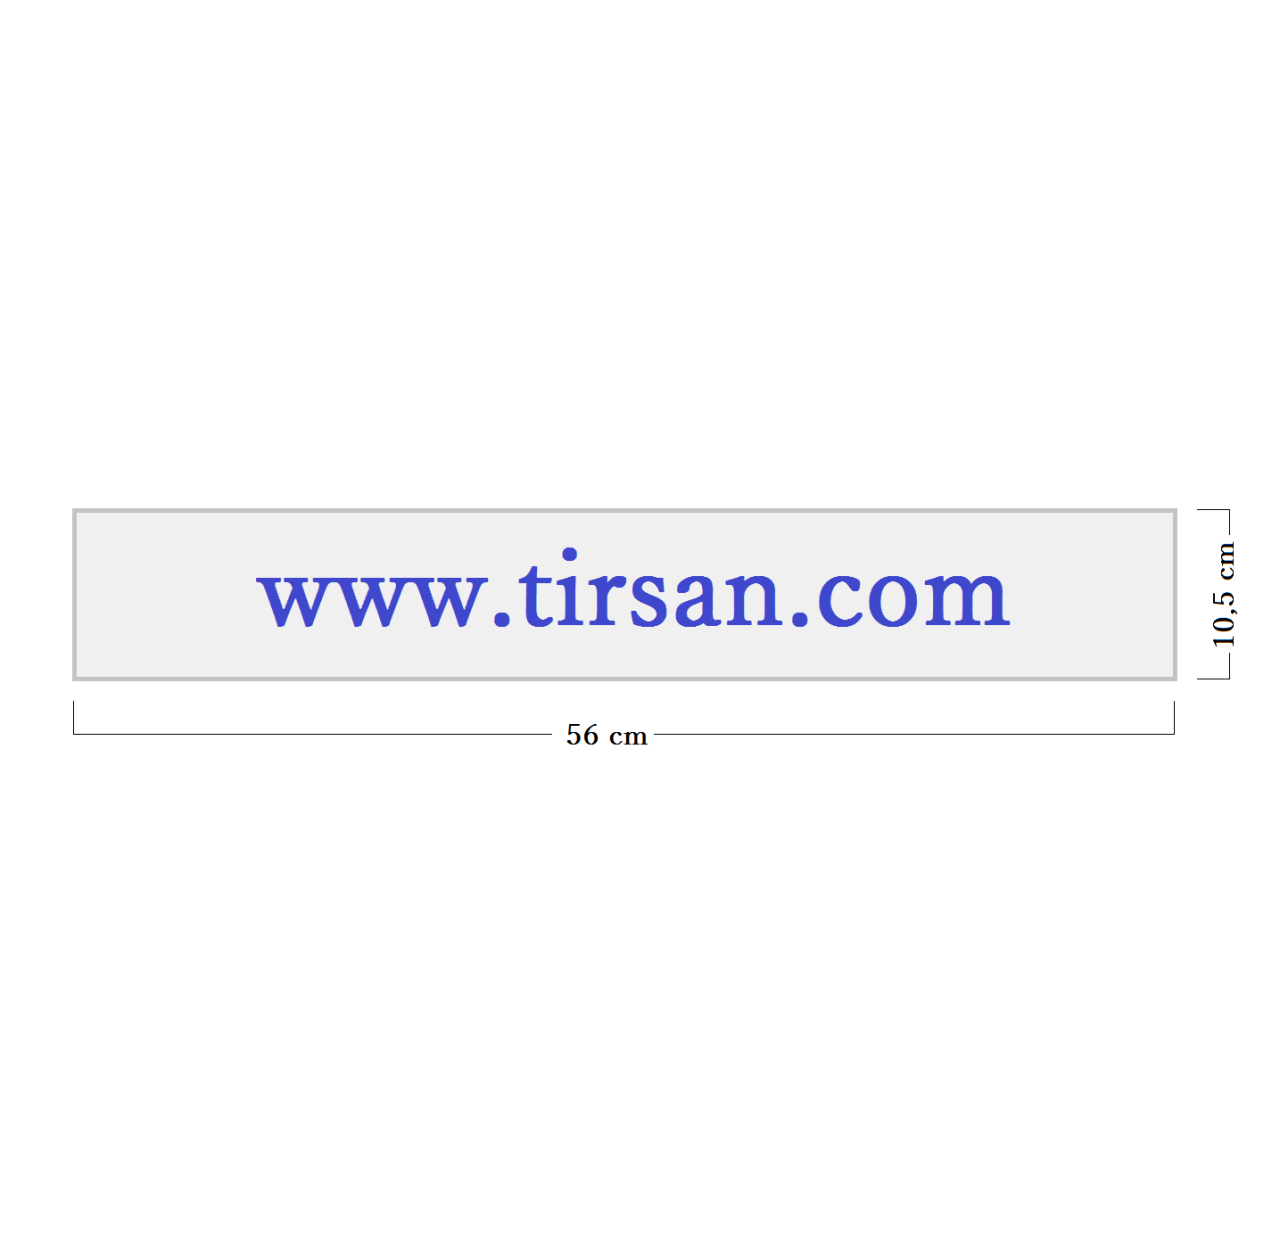 Tırsan Tır Etiket www.tirsan.com  -ET01404